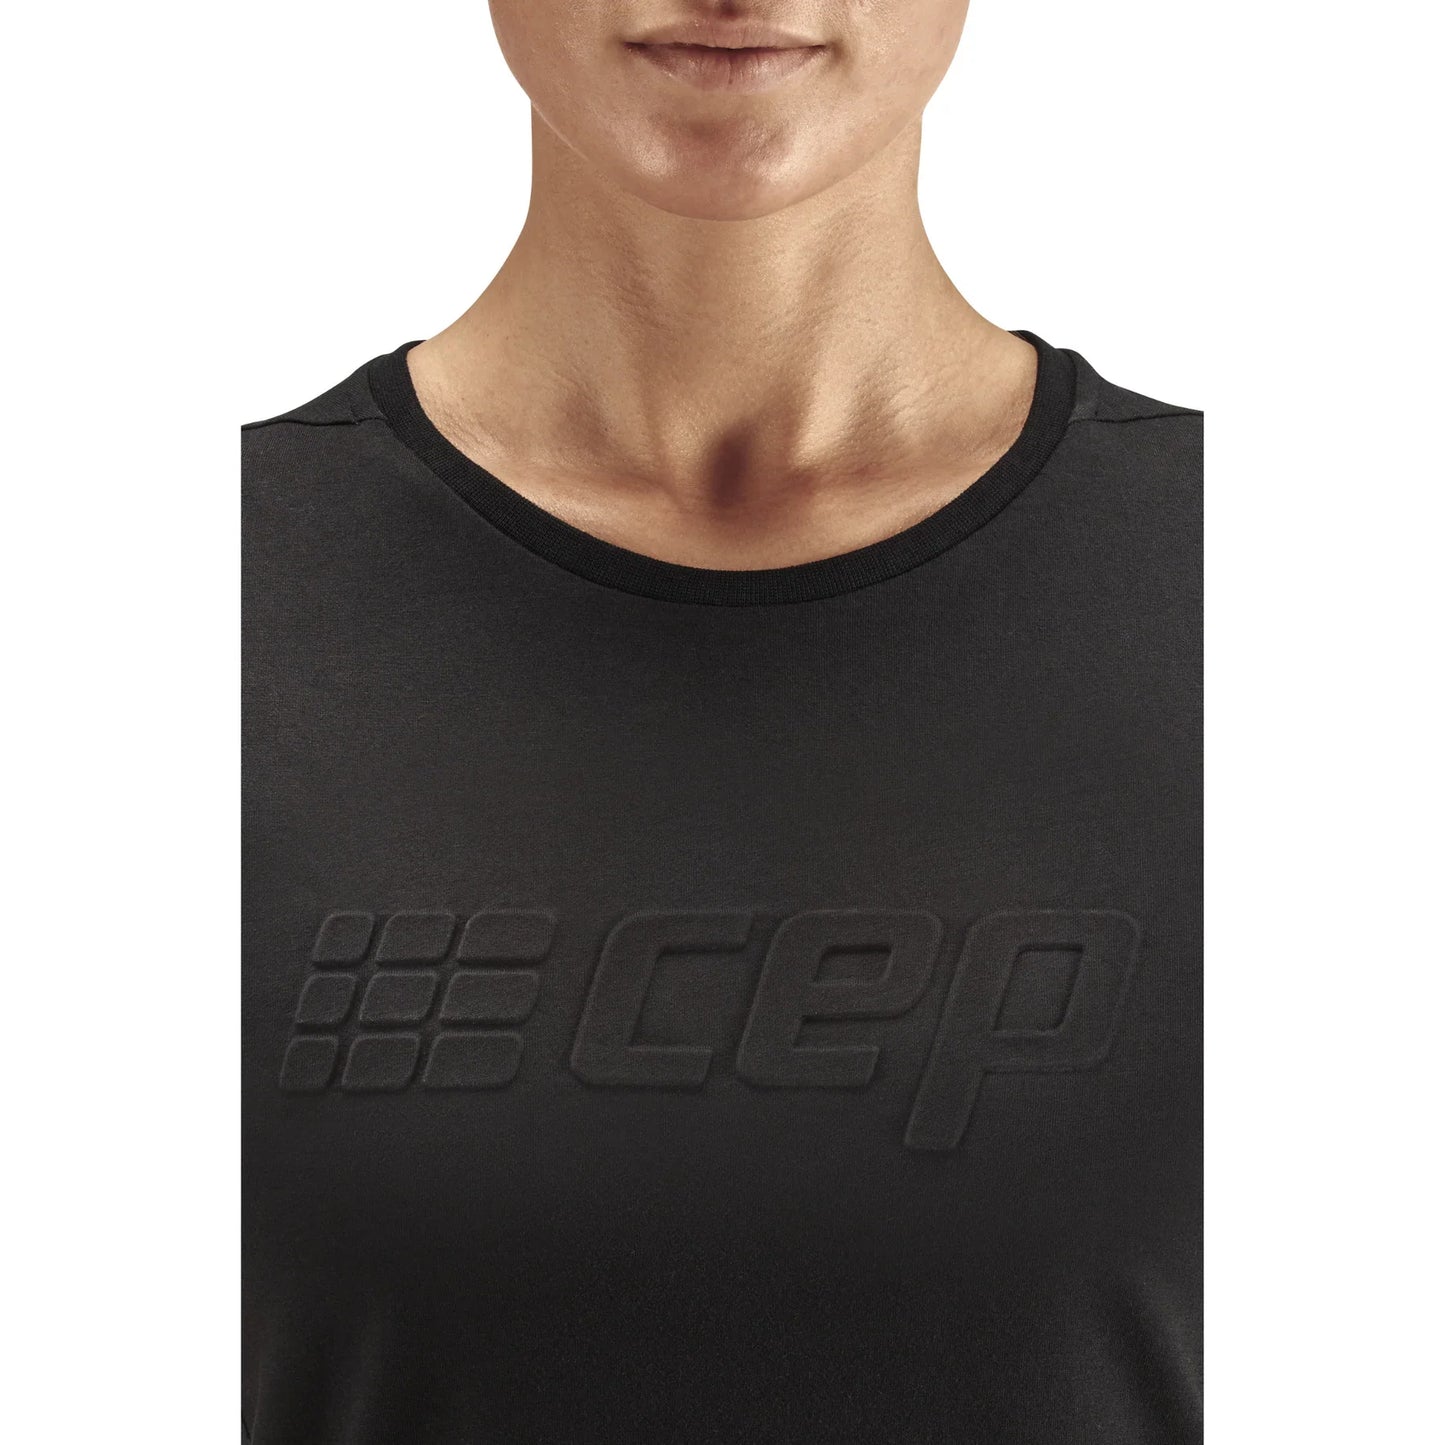 CEP Crew Shirt SS Women's - Black